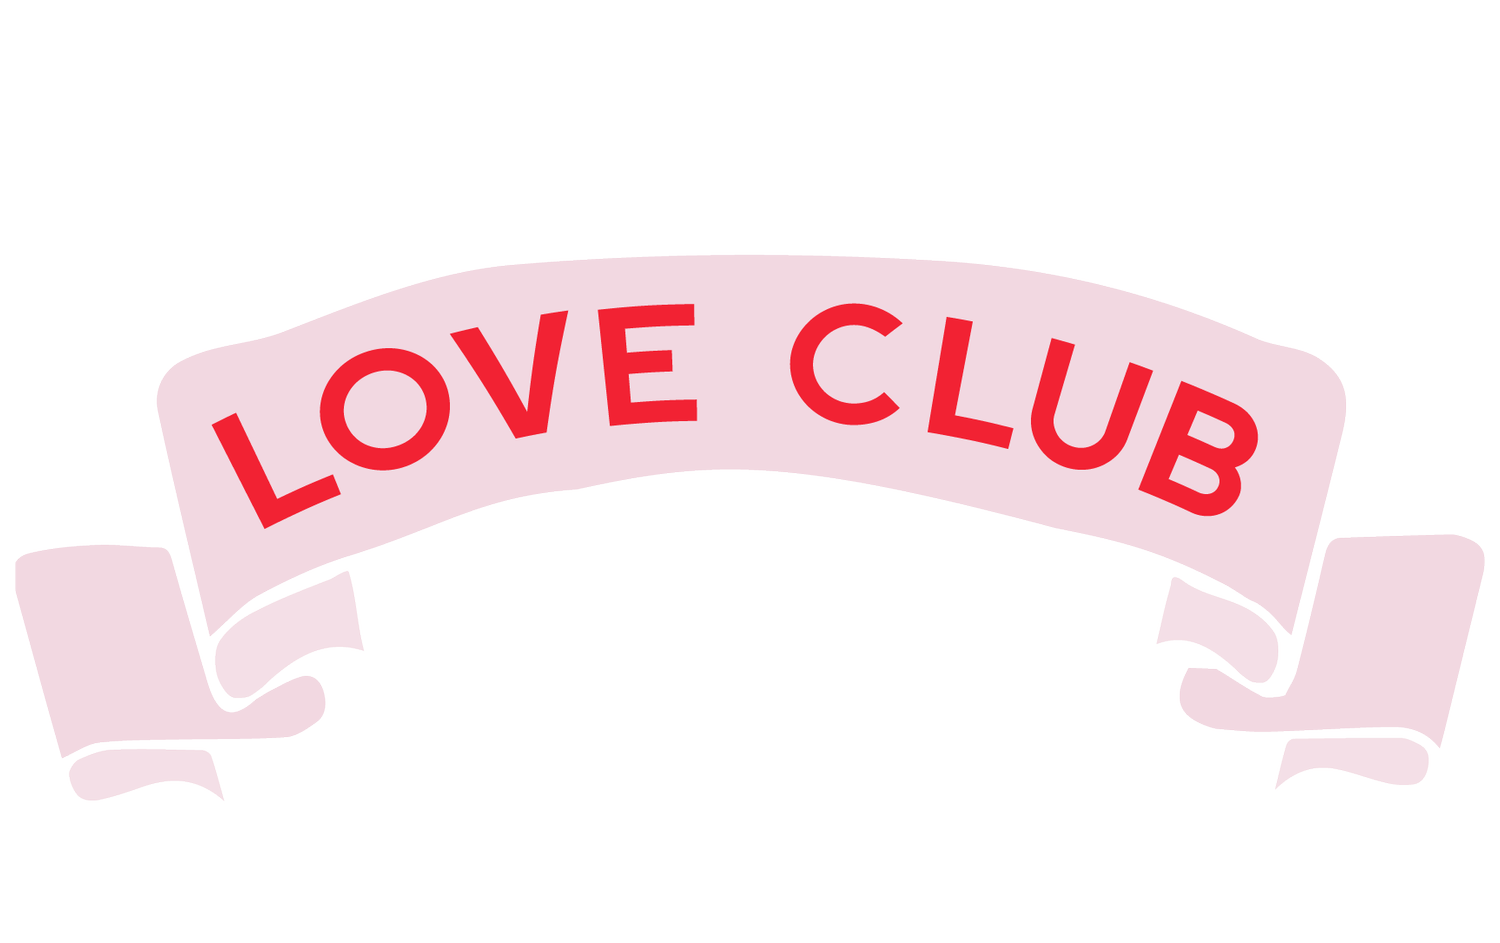 The Love Club (Copy)